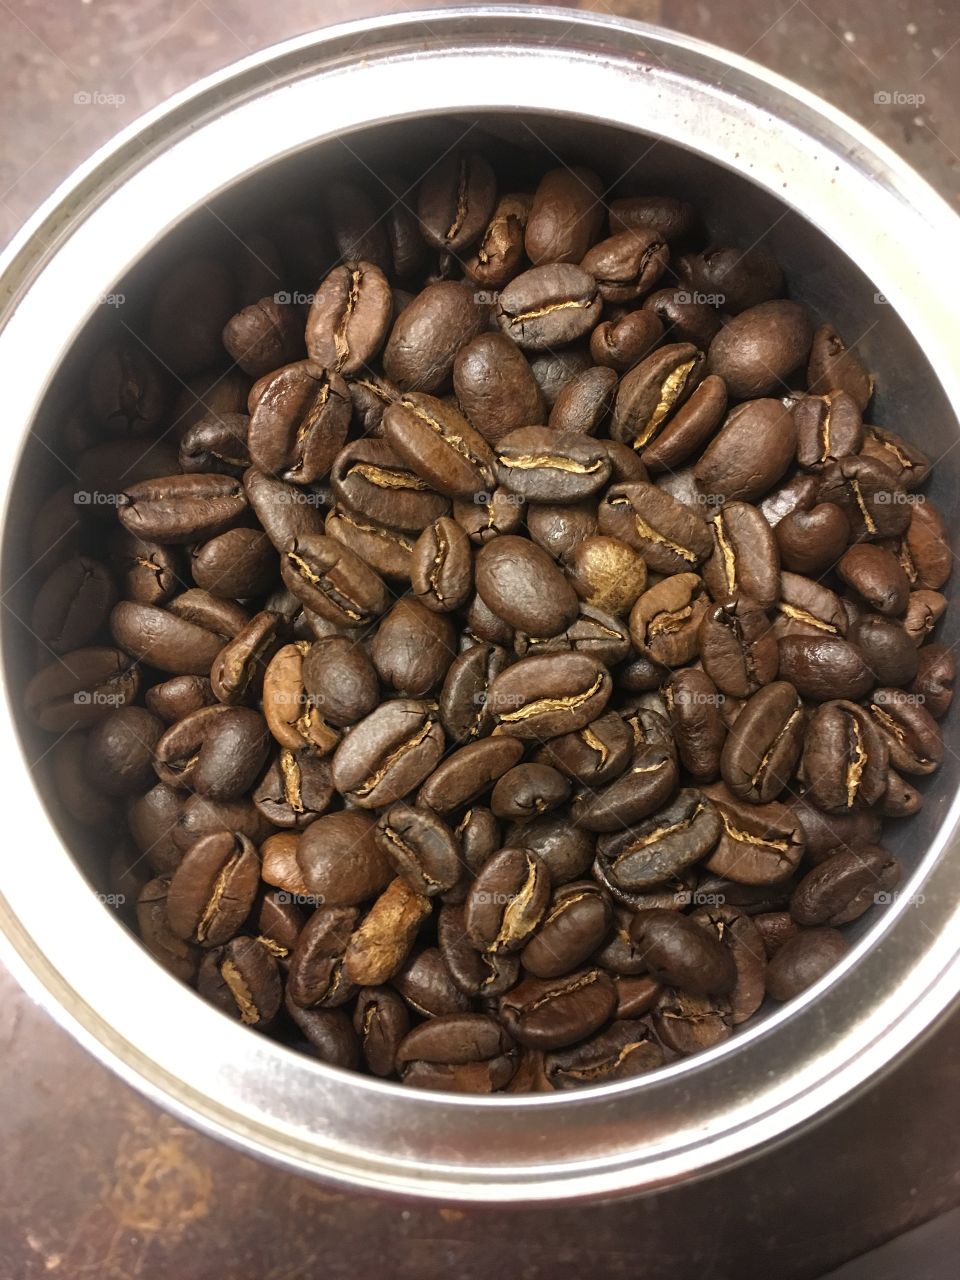 Freshly roasted coffee beans. 